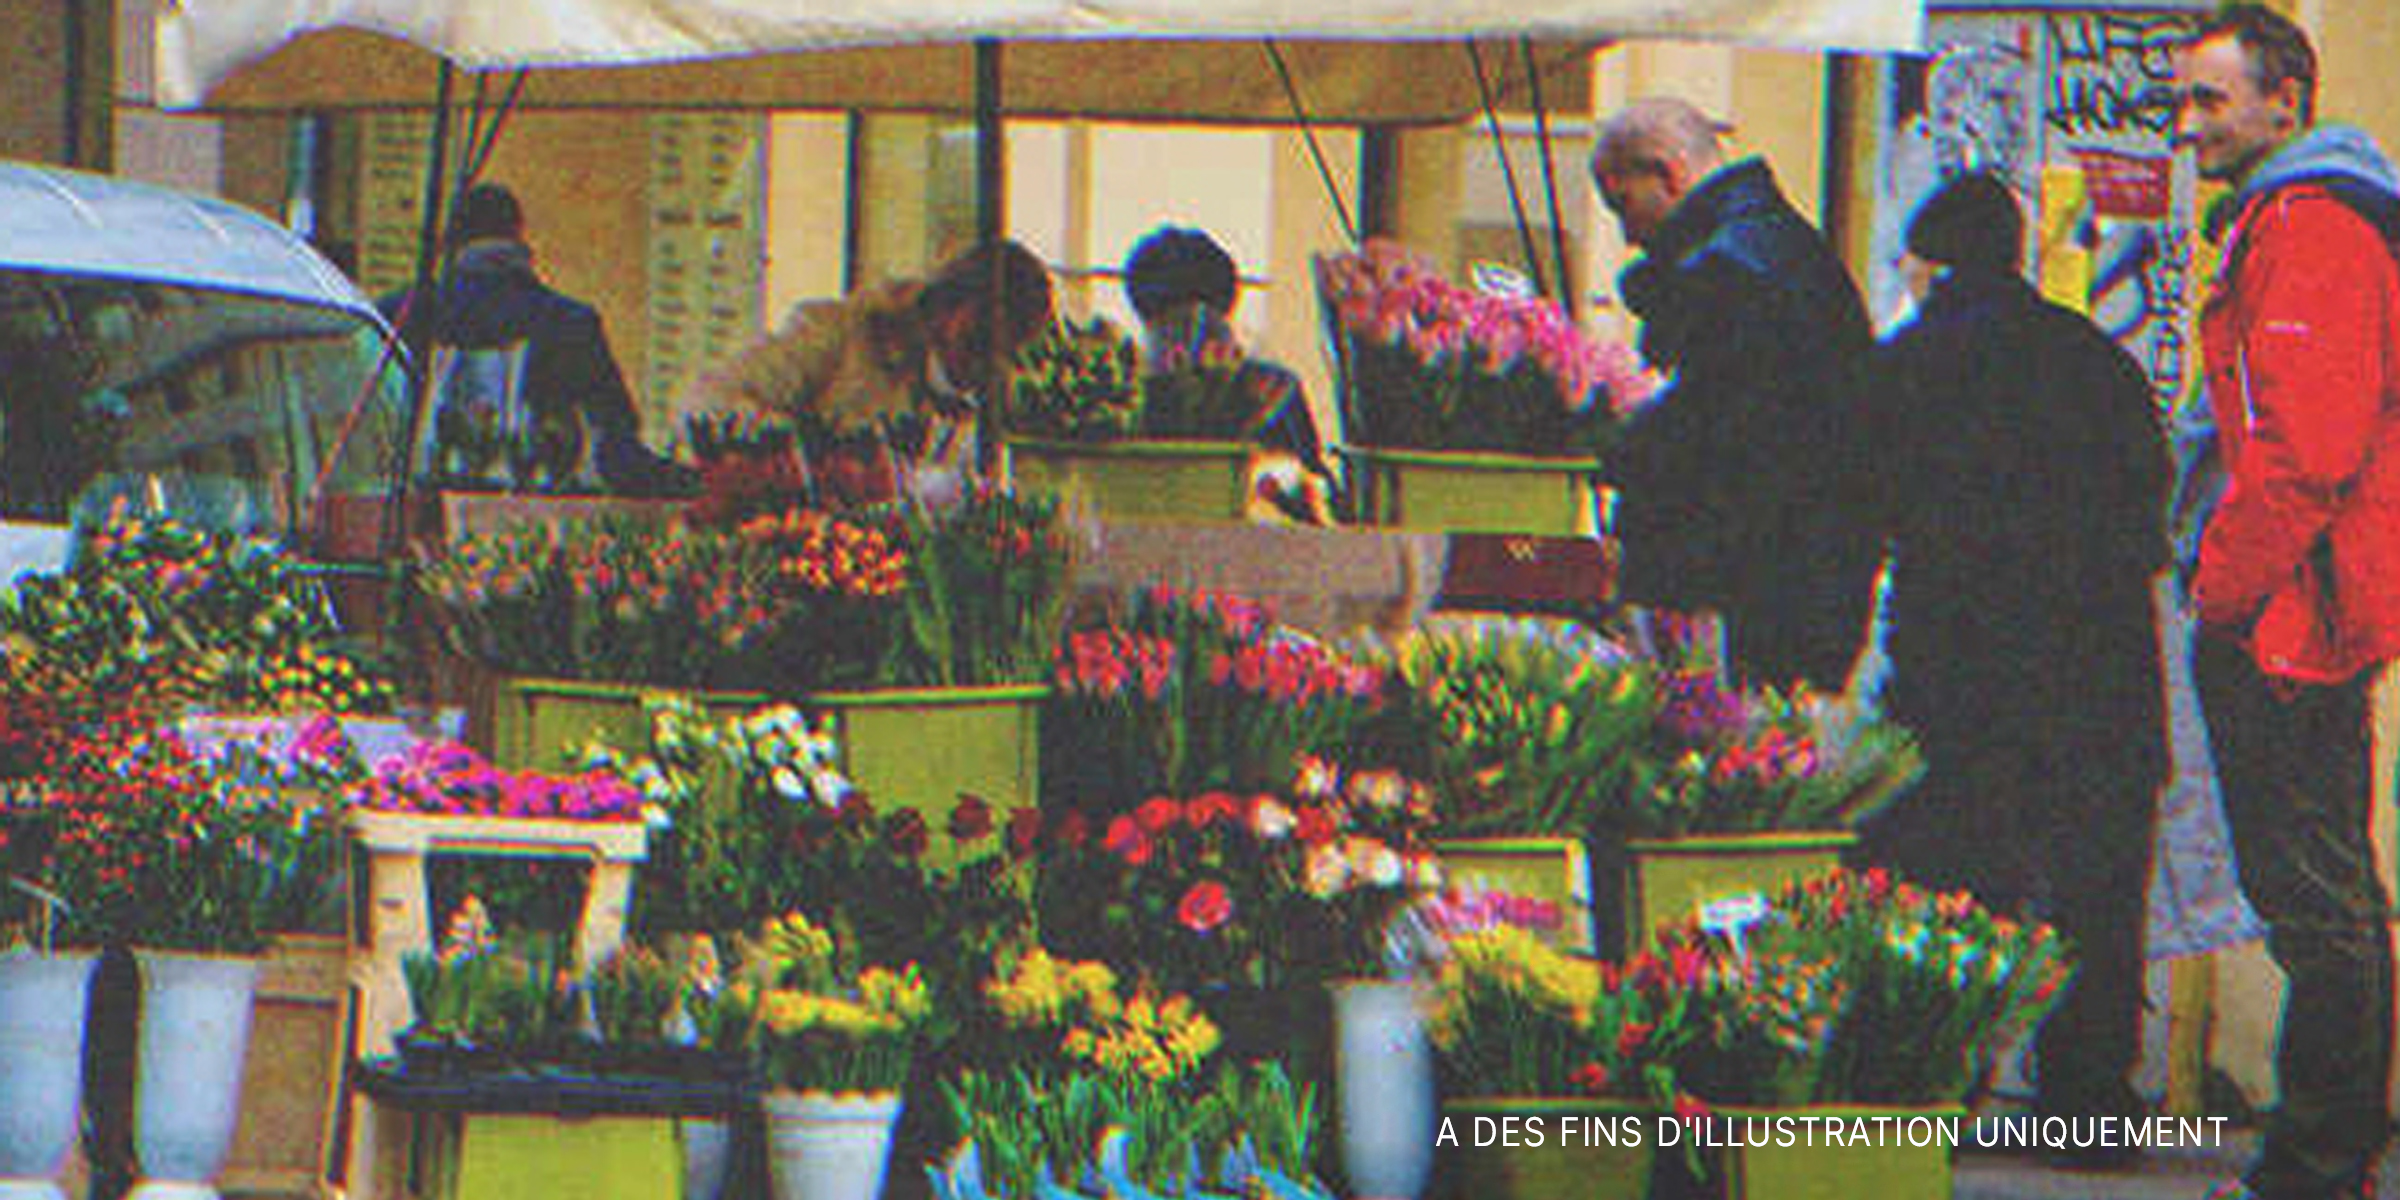 Un magasin de fleurs | Source : Shutterstock